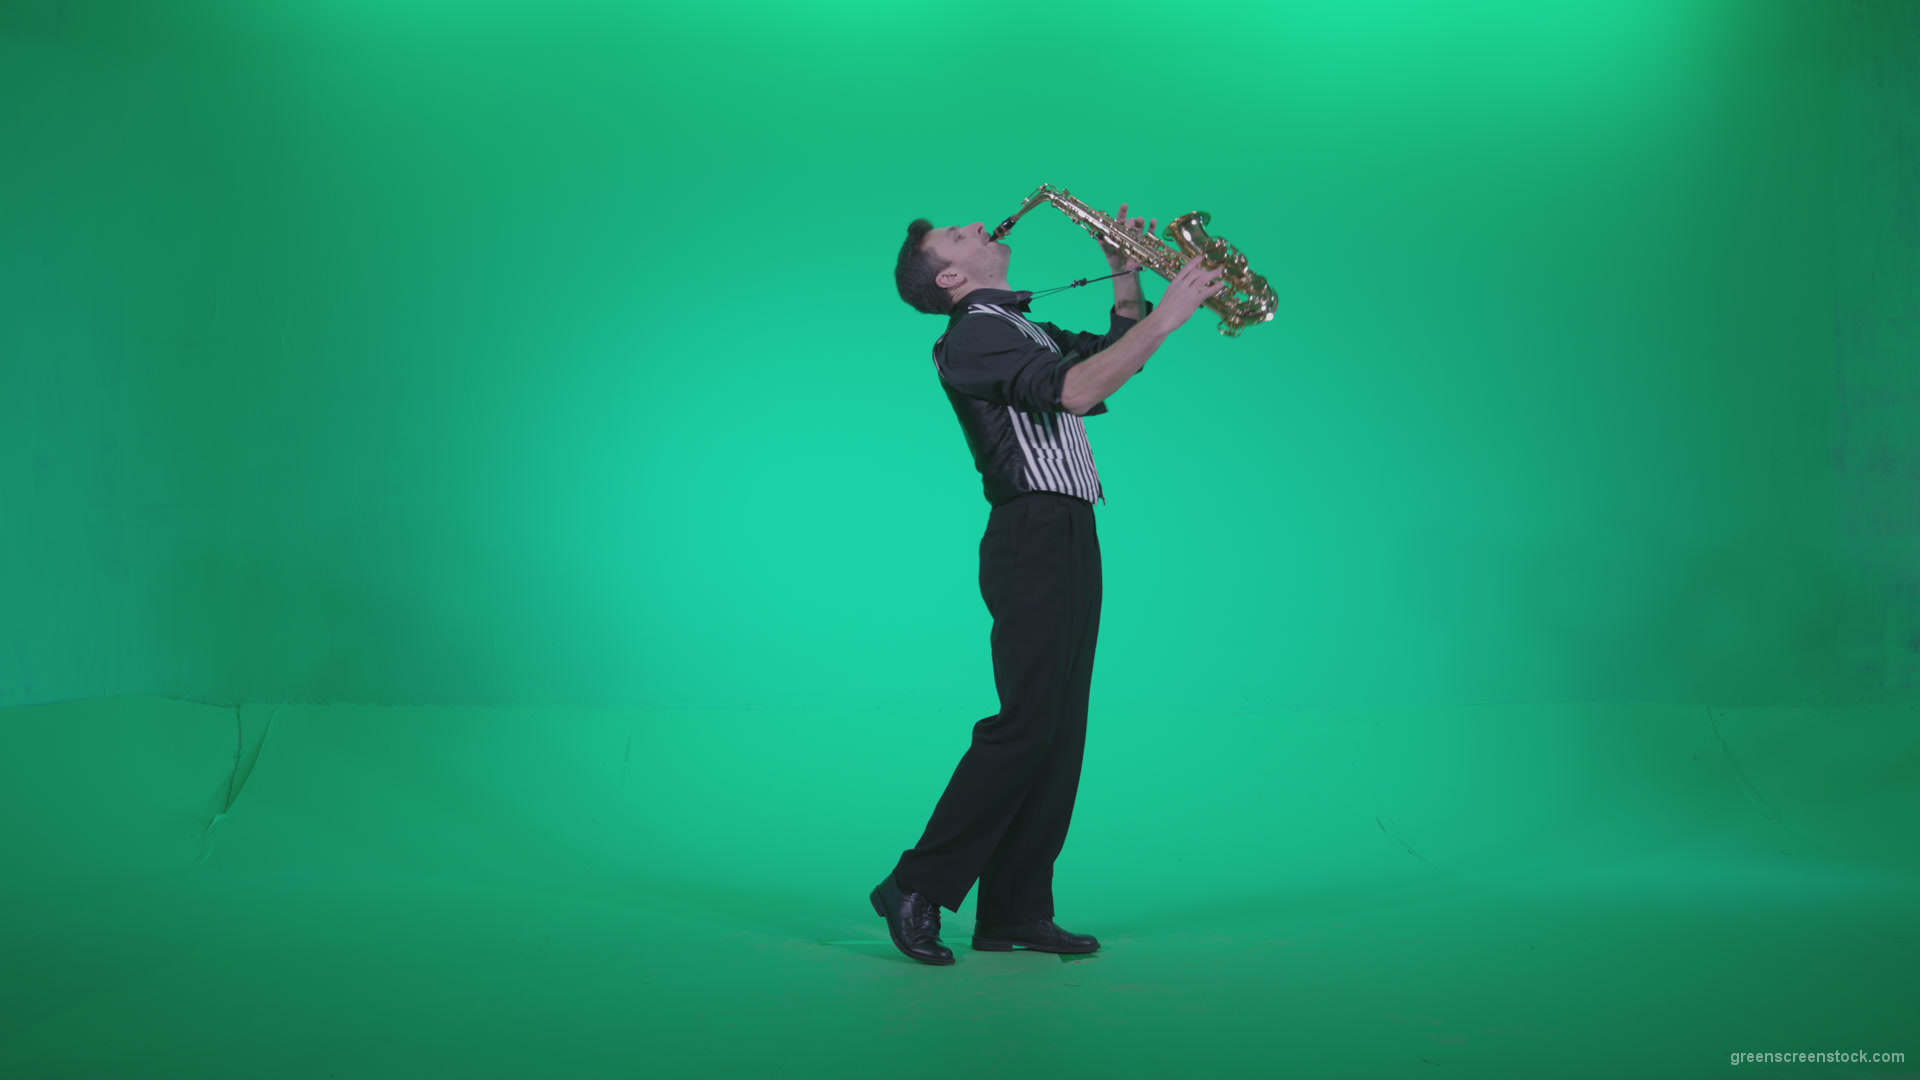 Saxophone-Virtuoso-Performer-s3_009 Green Screen Stock